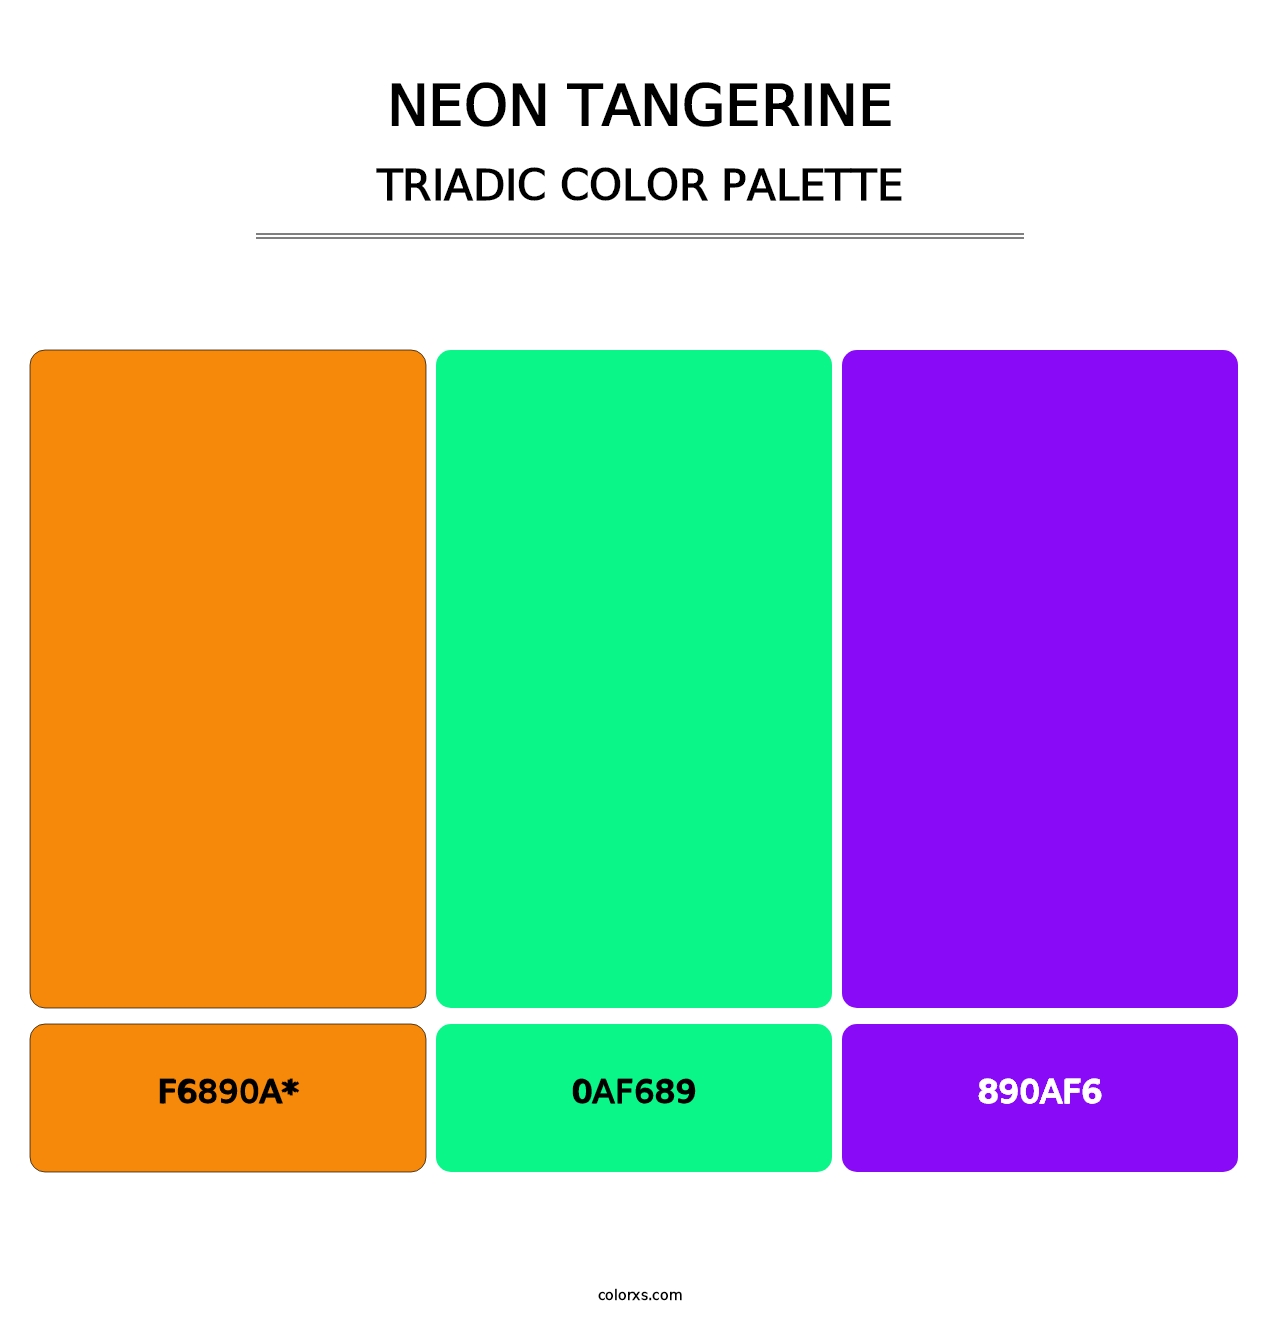 Neon Tangerine - Triadic Color Palette